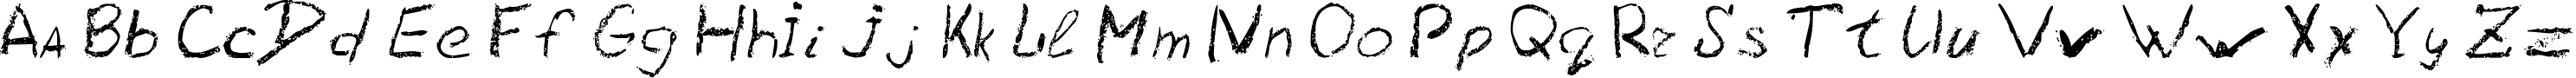 Пример написания английского алфавита шрифтом LC Chalk